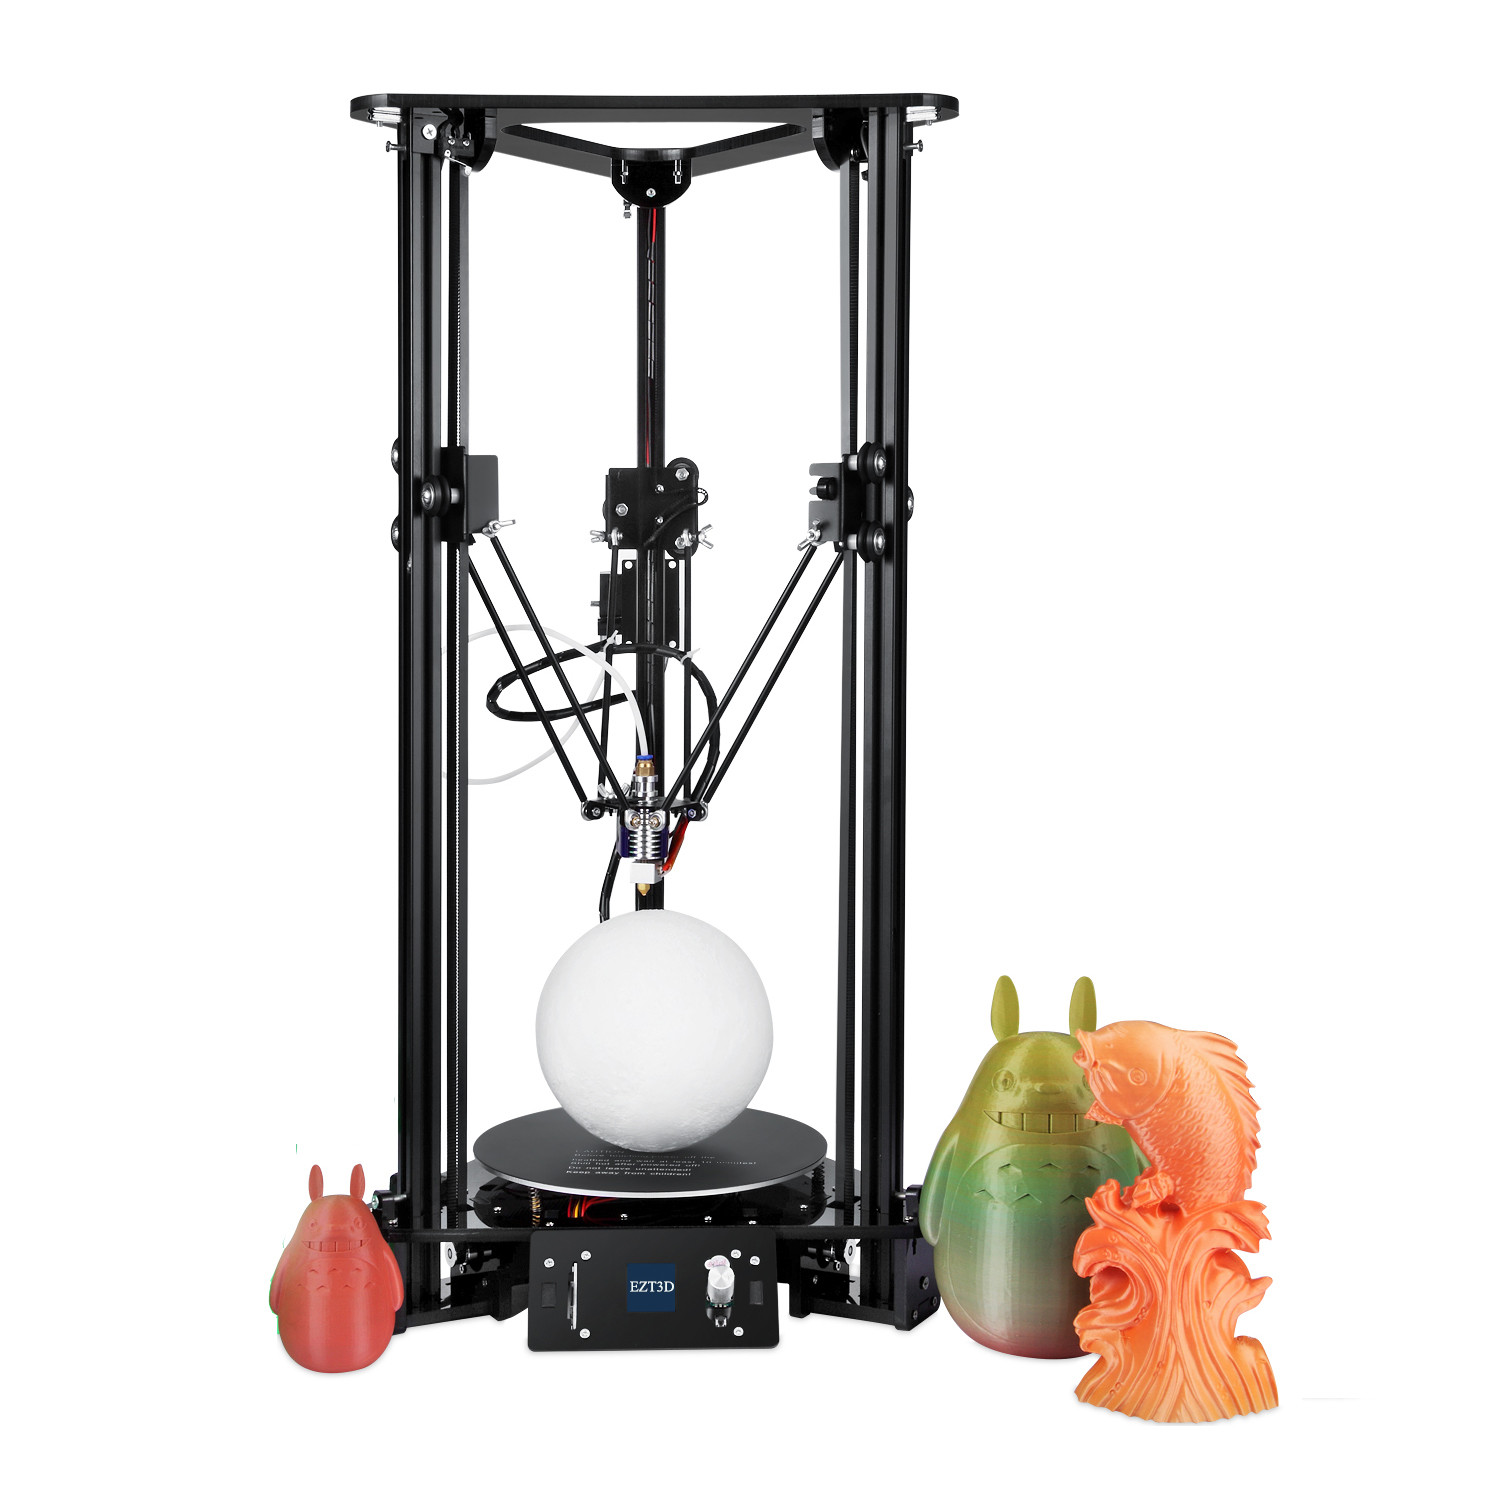 Best ideas about DIY 3D Printer Kit
. Save or Pin EZT T1 Delta DIY 3D Printer Kit 180 300 320mm Now.